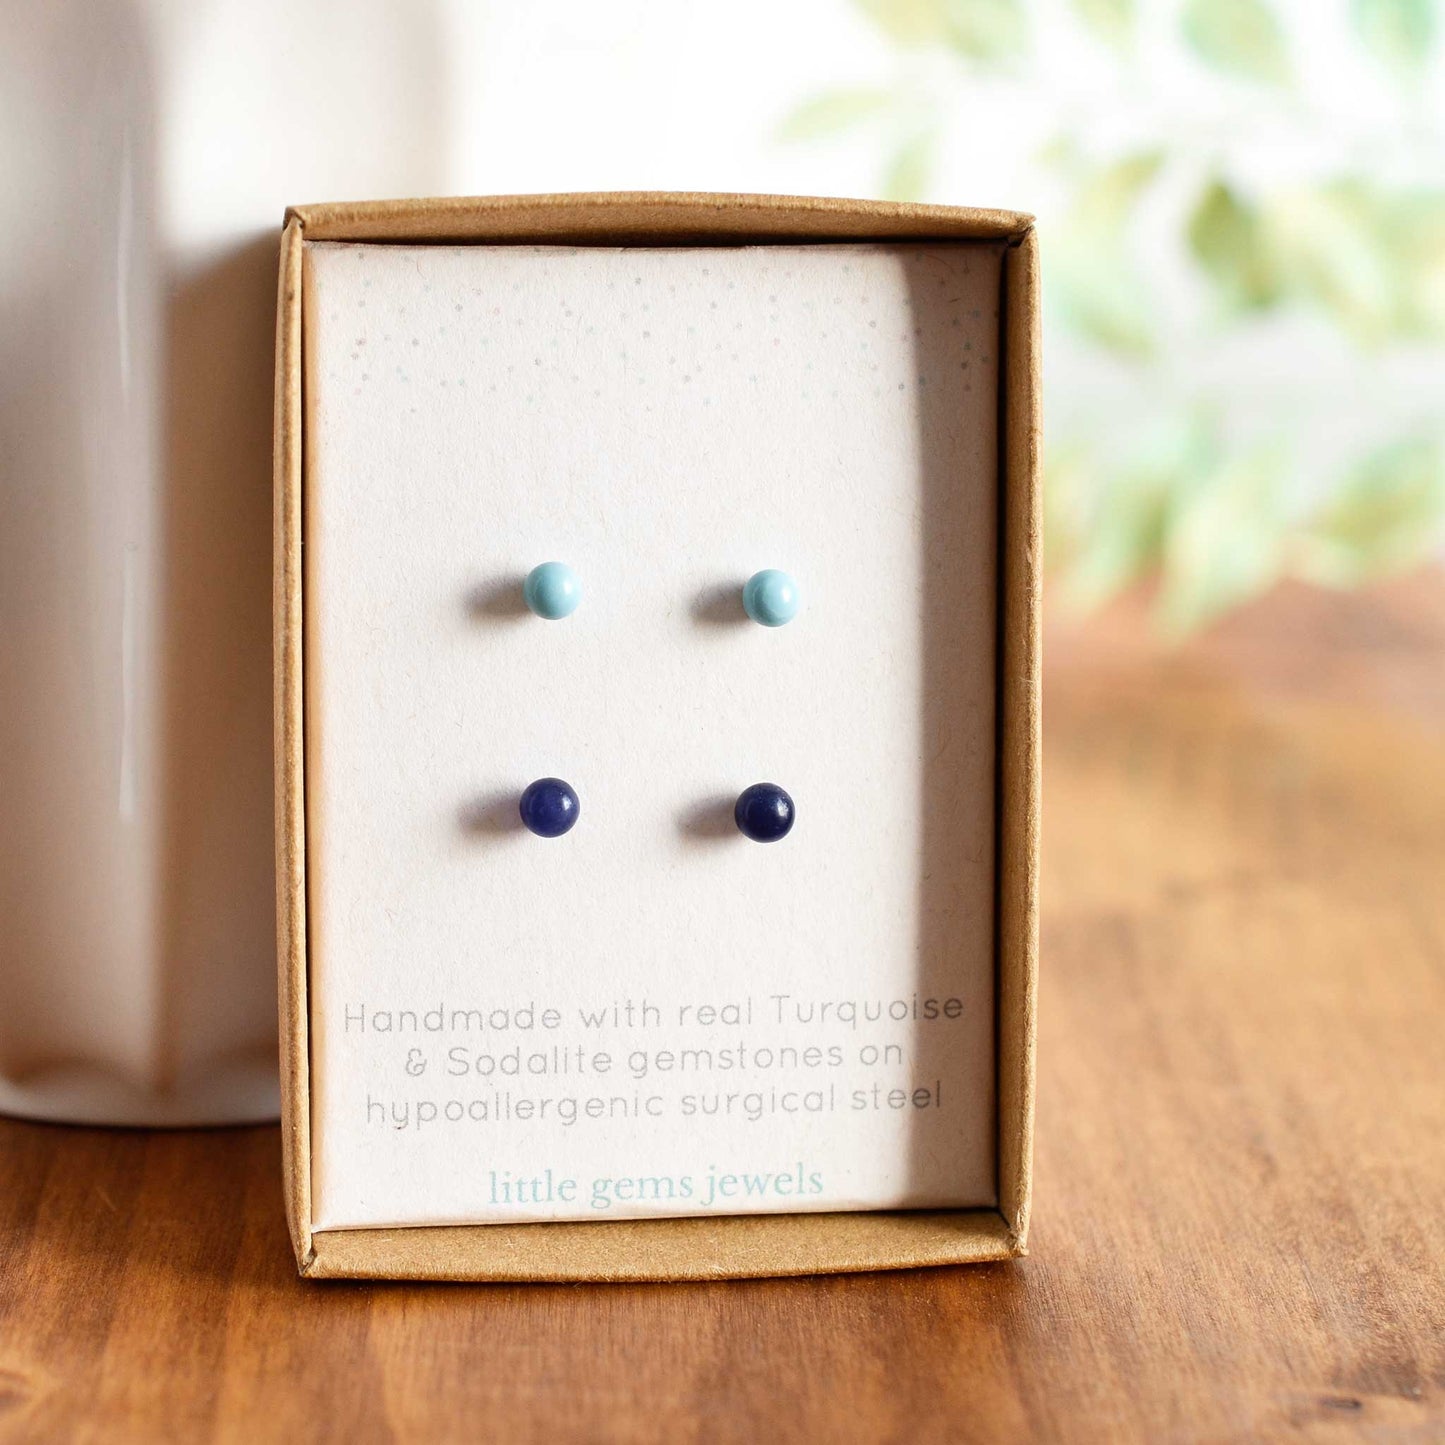 Turquoise & Sodalite gemstone stud earrings in eco friendly gift box